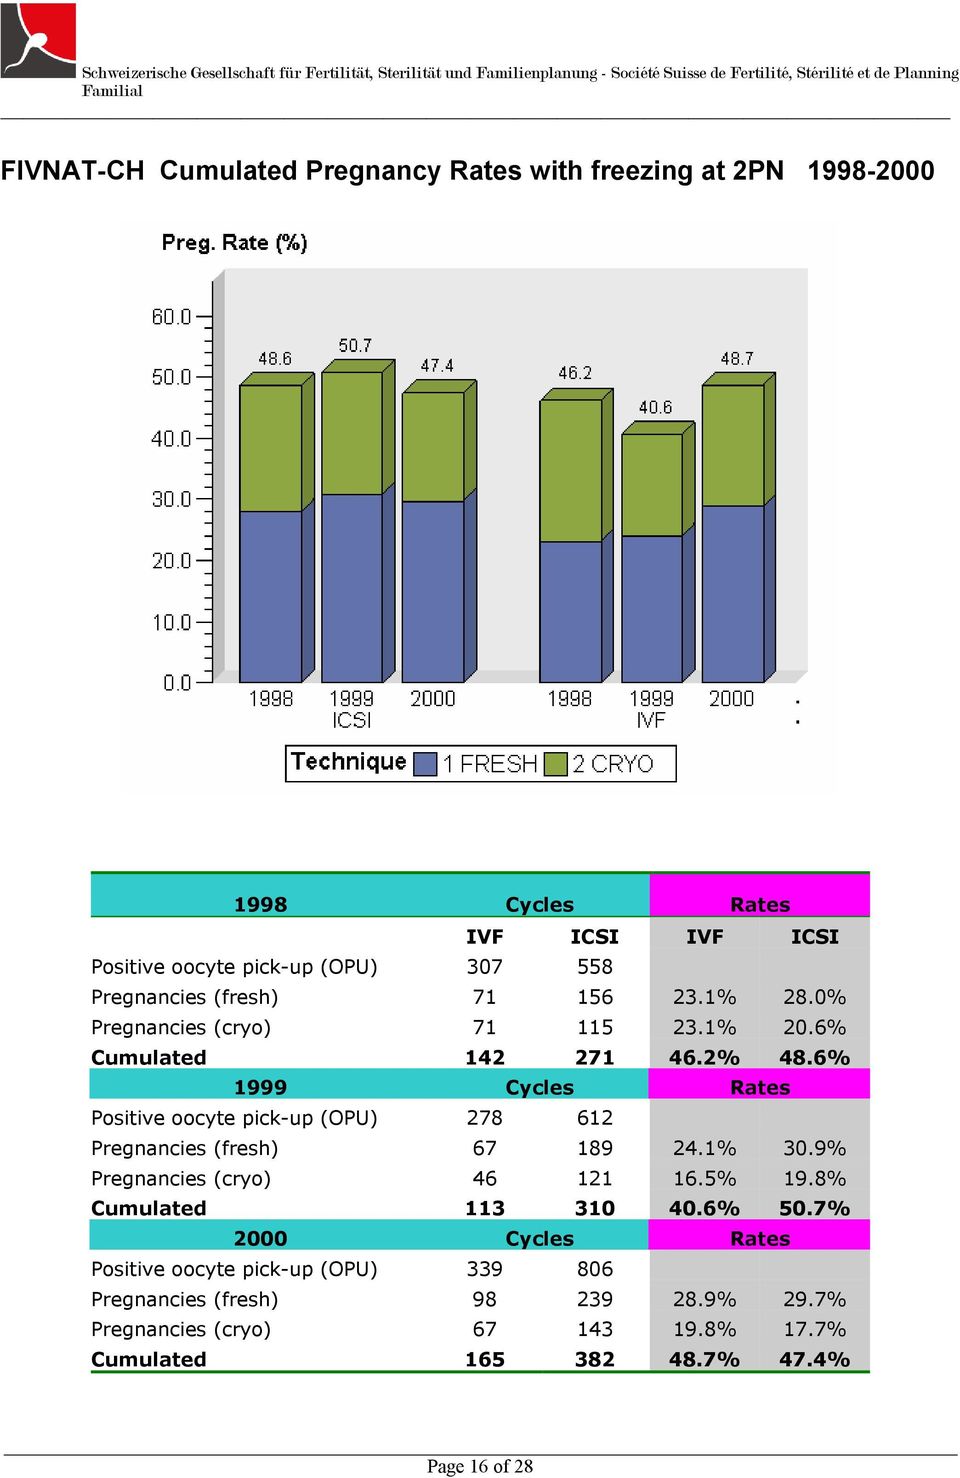 6% Cumulated 142 271 46.2% 48.6% 1999 Cycles Rates Positive oocyte pick-up (OPU) 278 612 Pregnancies (fresh) 67 189 24.1% 30.9% Pregnancies (cryo) 46 121 16.5% 19.